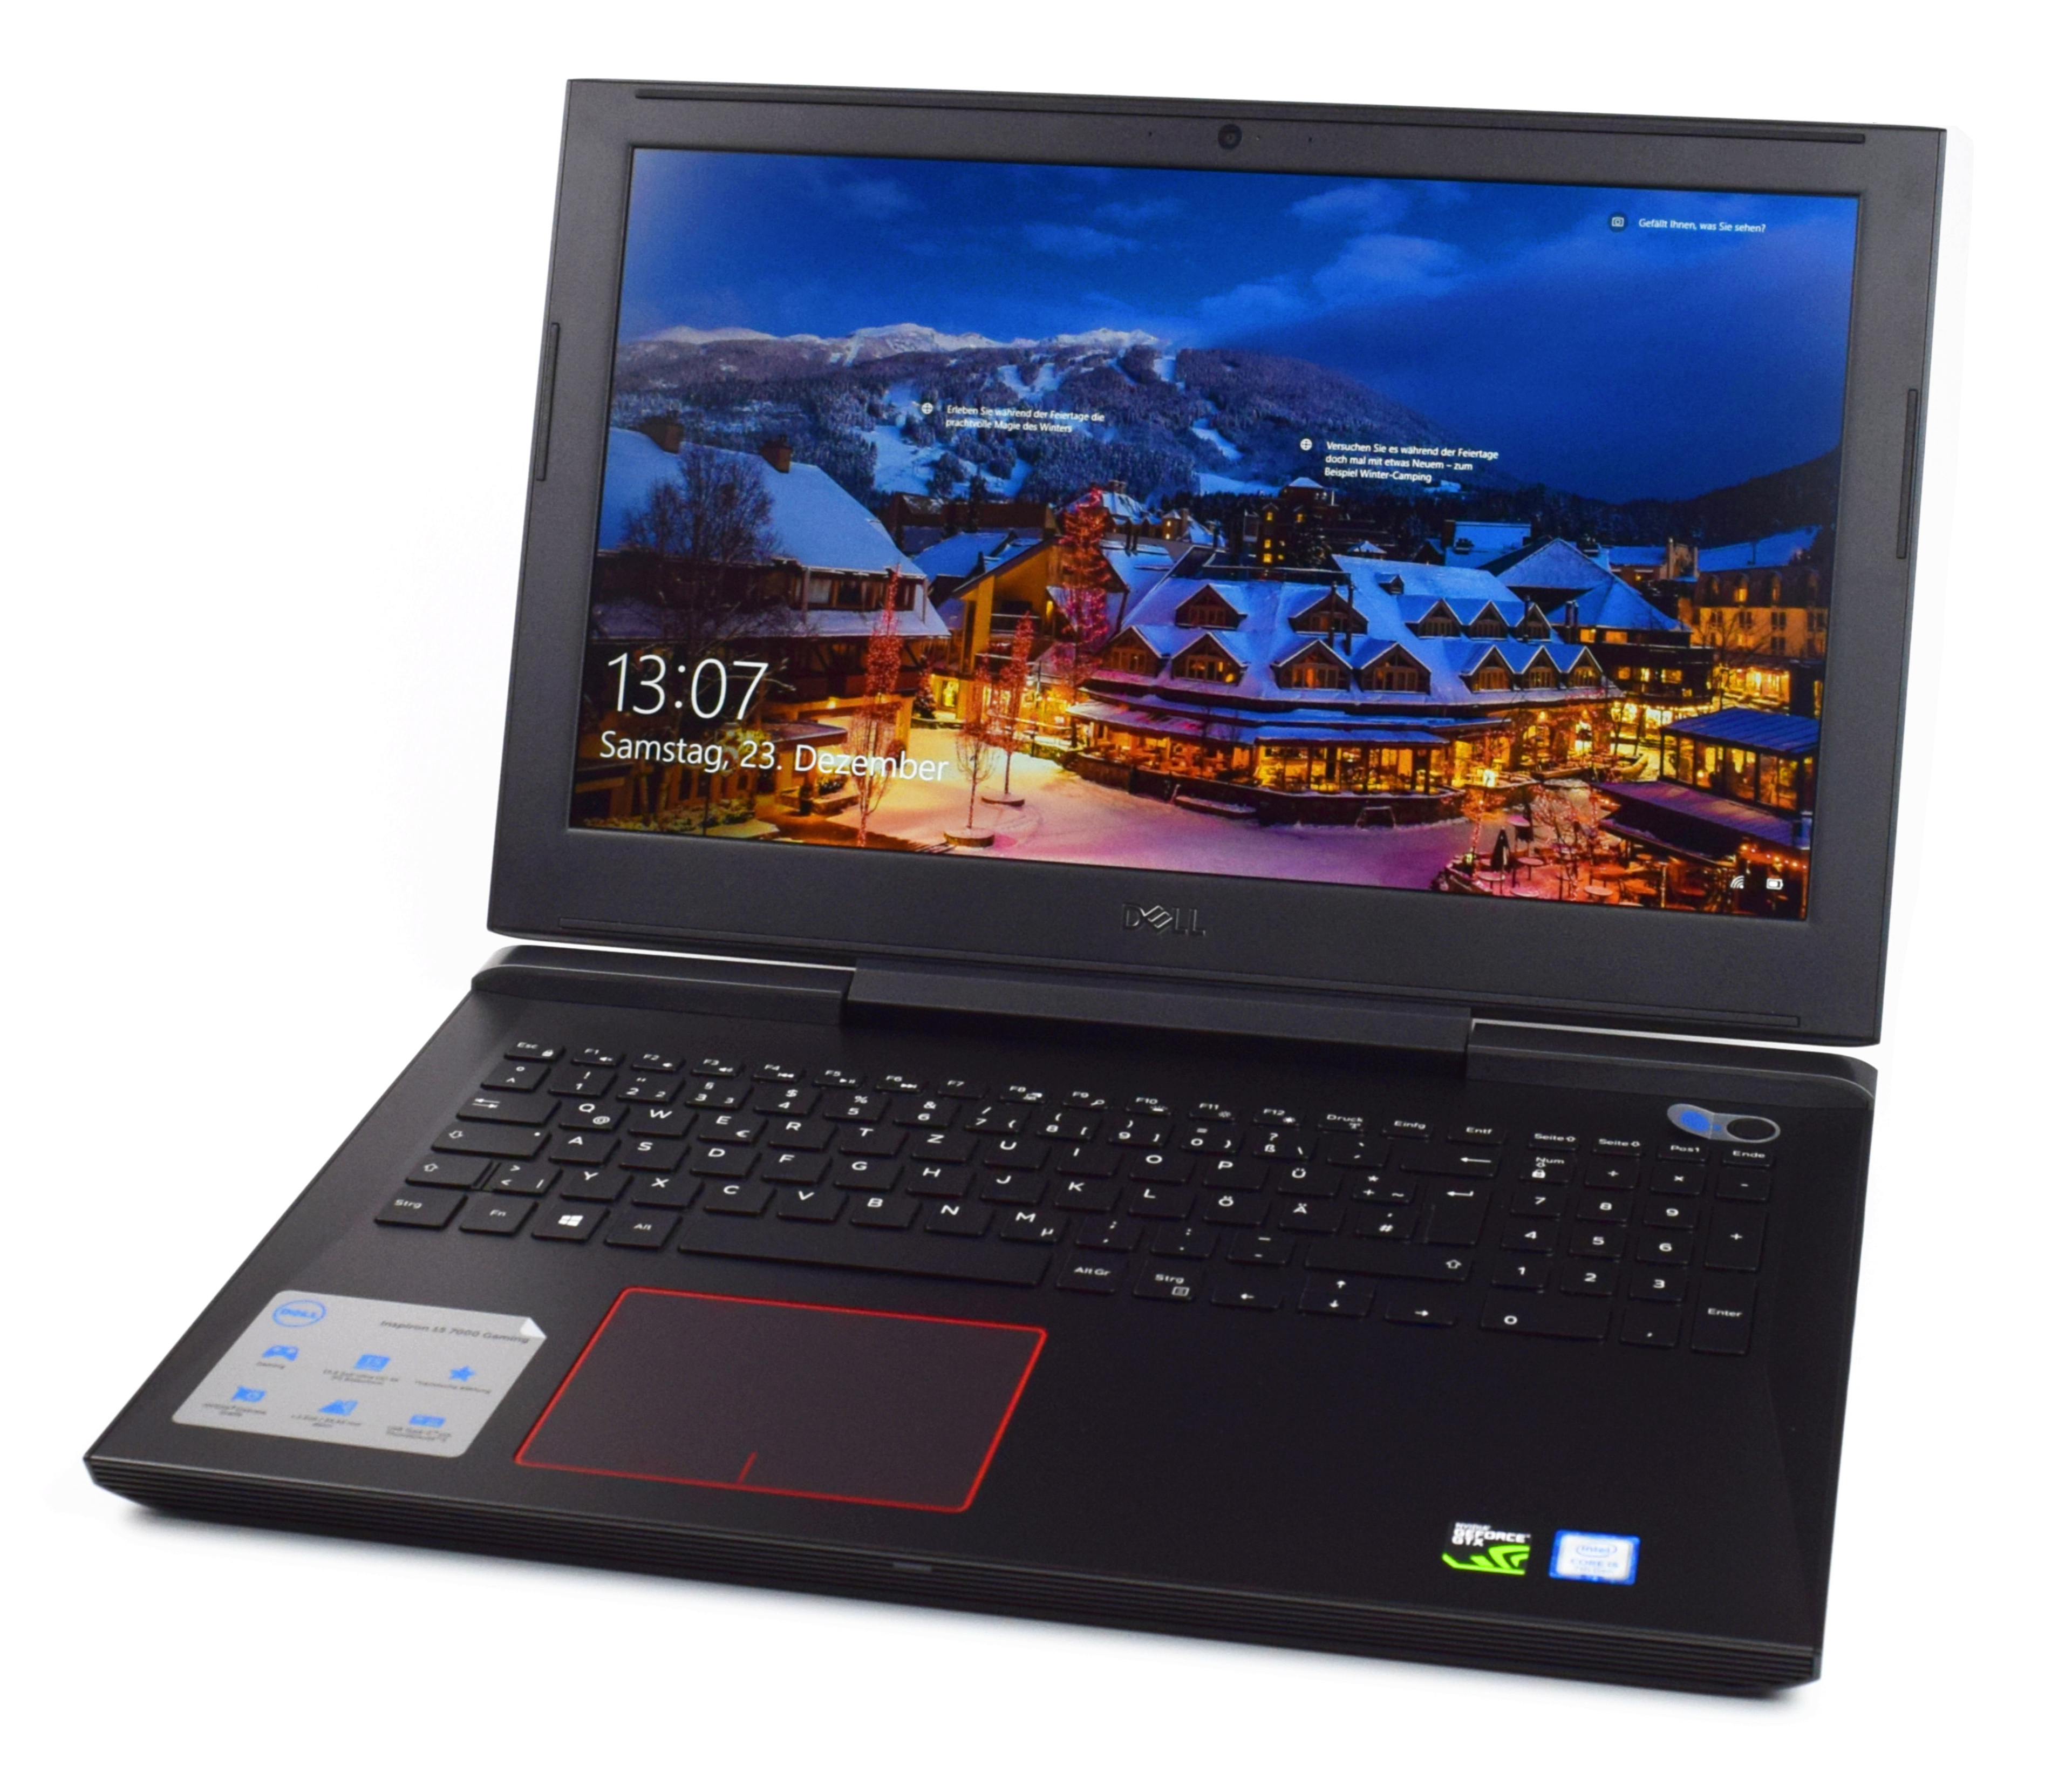 Test Dell Inspiron 15 7000 7577 (i5-7300HQ, GTX 1050, 1080p) Laptop